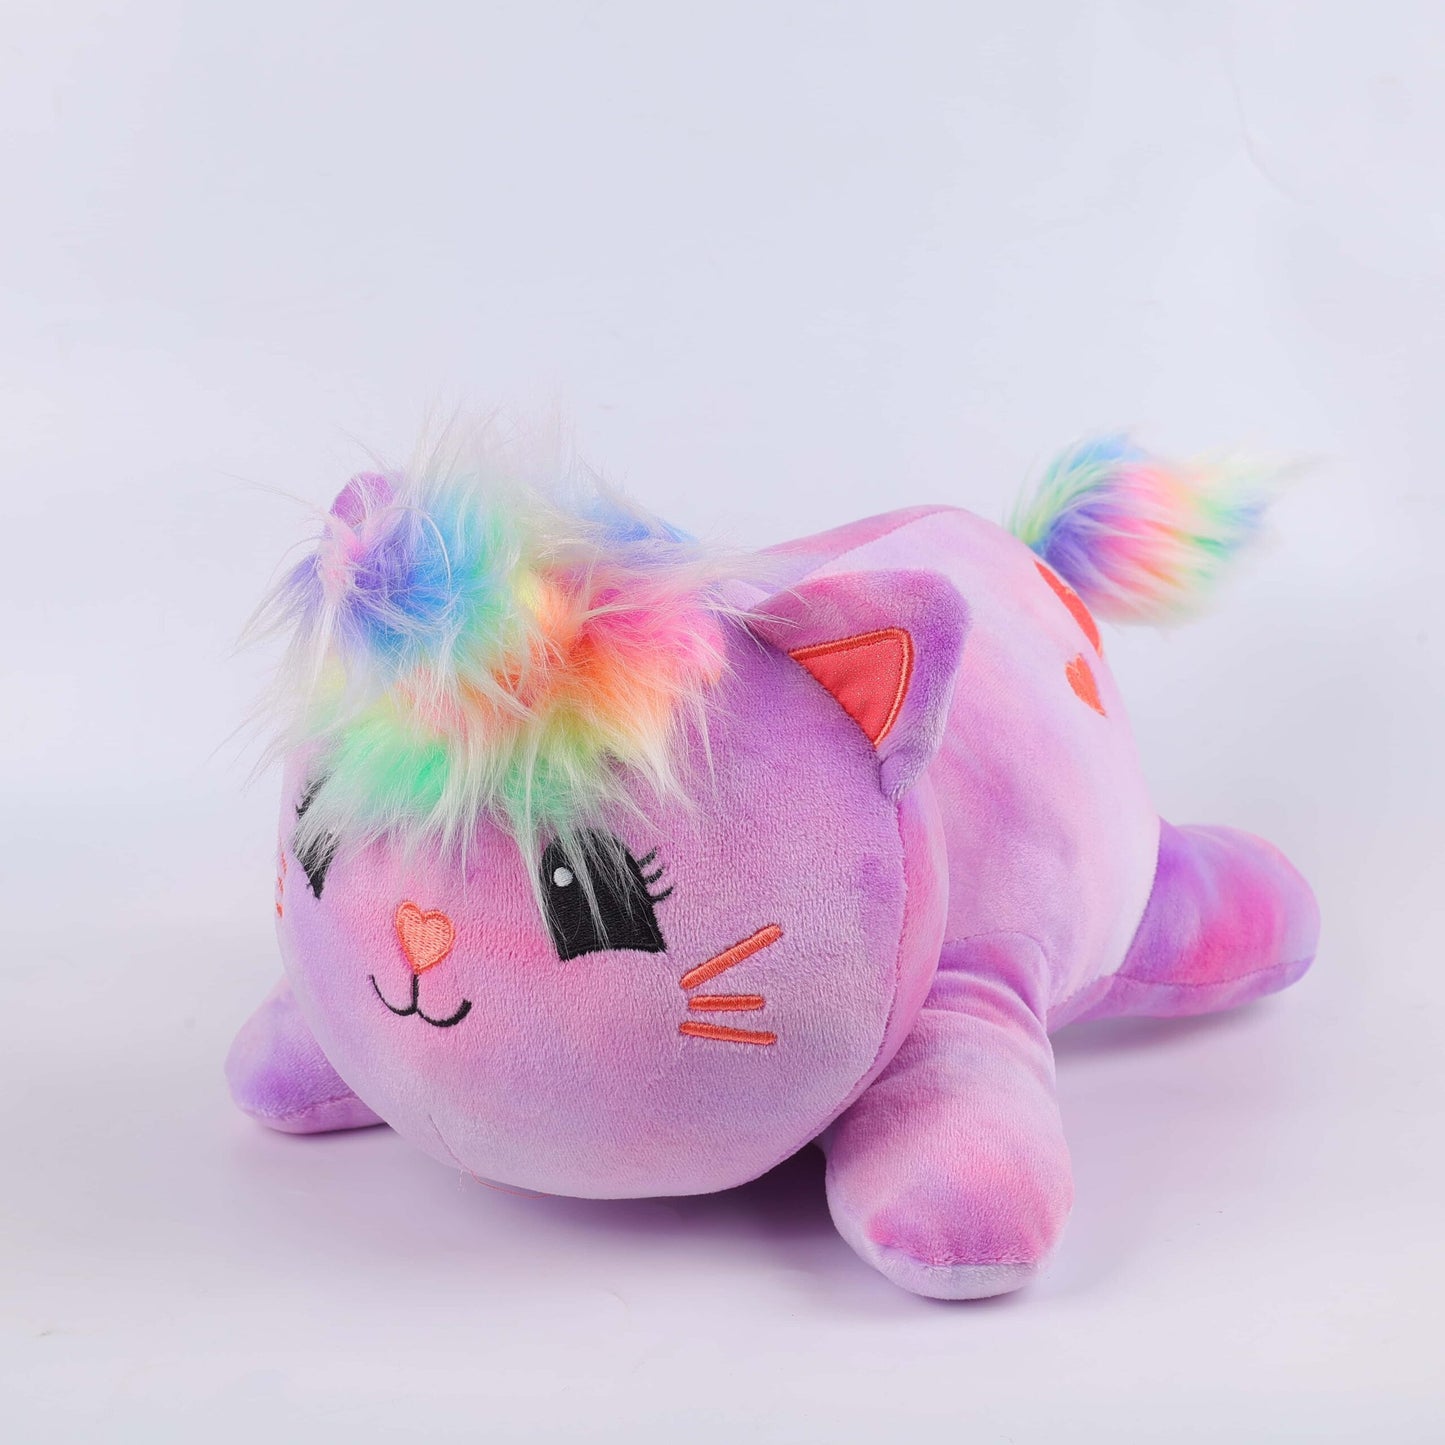 30 CM / 12 inch Rainbow Unicorn Animal Plush Toy